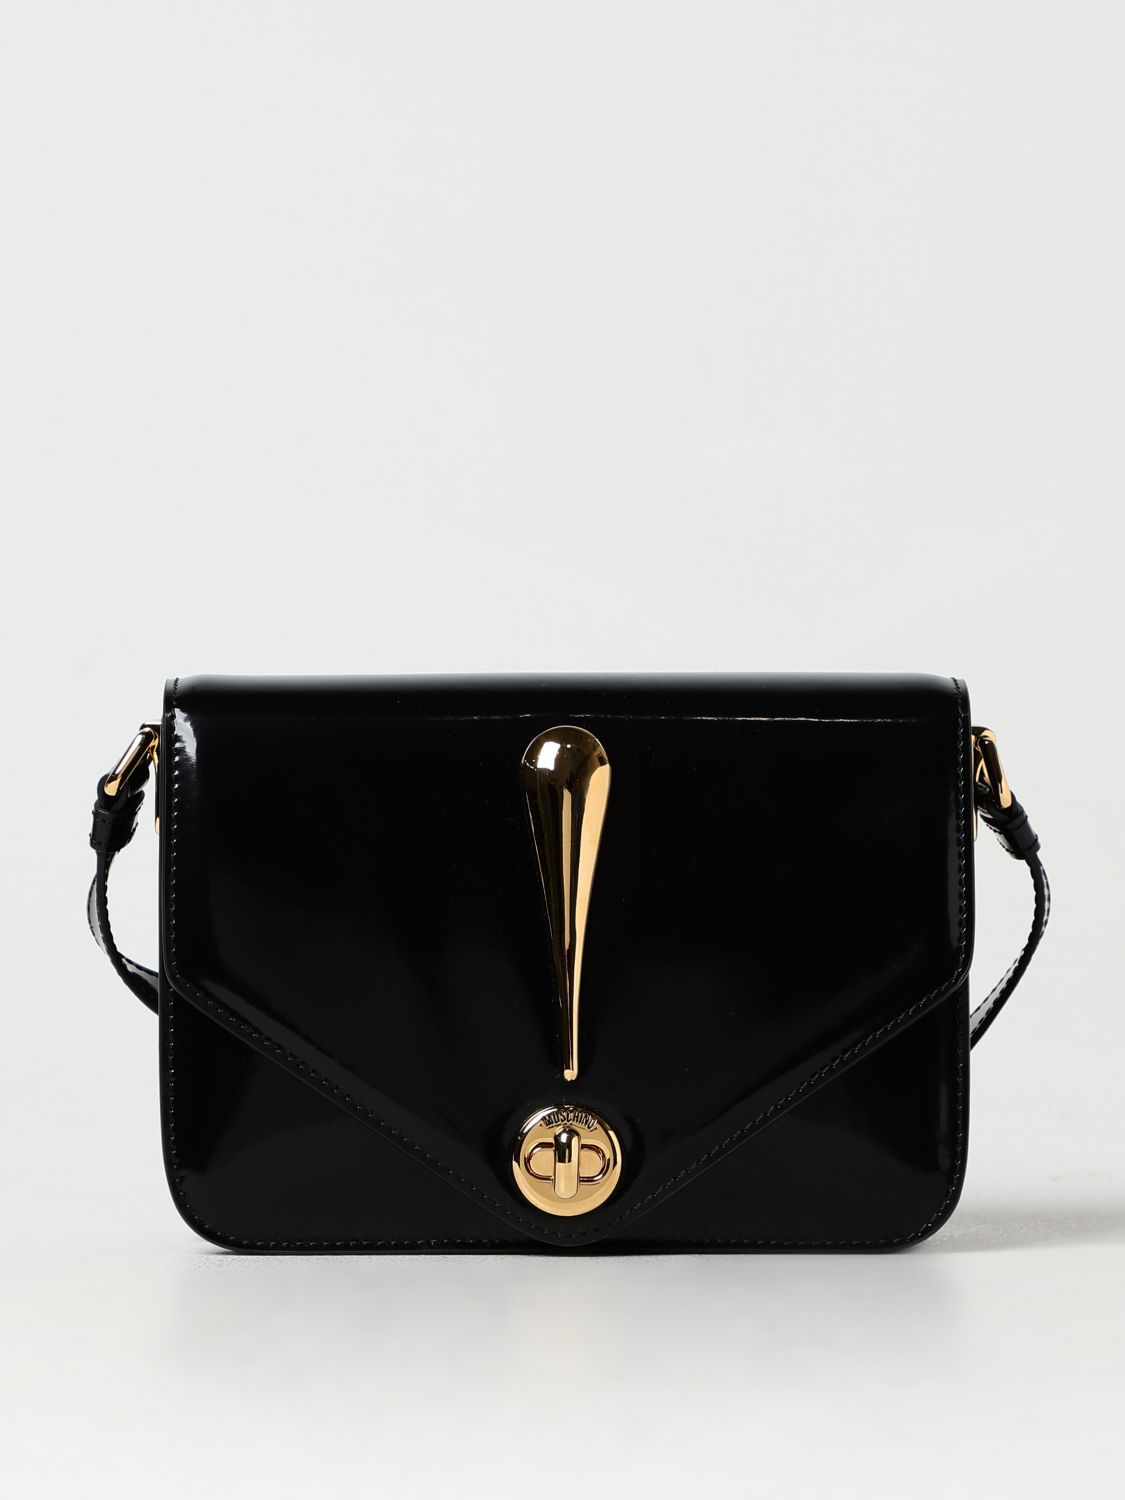 Moschino Couture Mini Bag MOSCHINO COUTURE Woman color Black